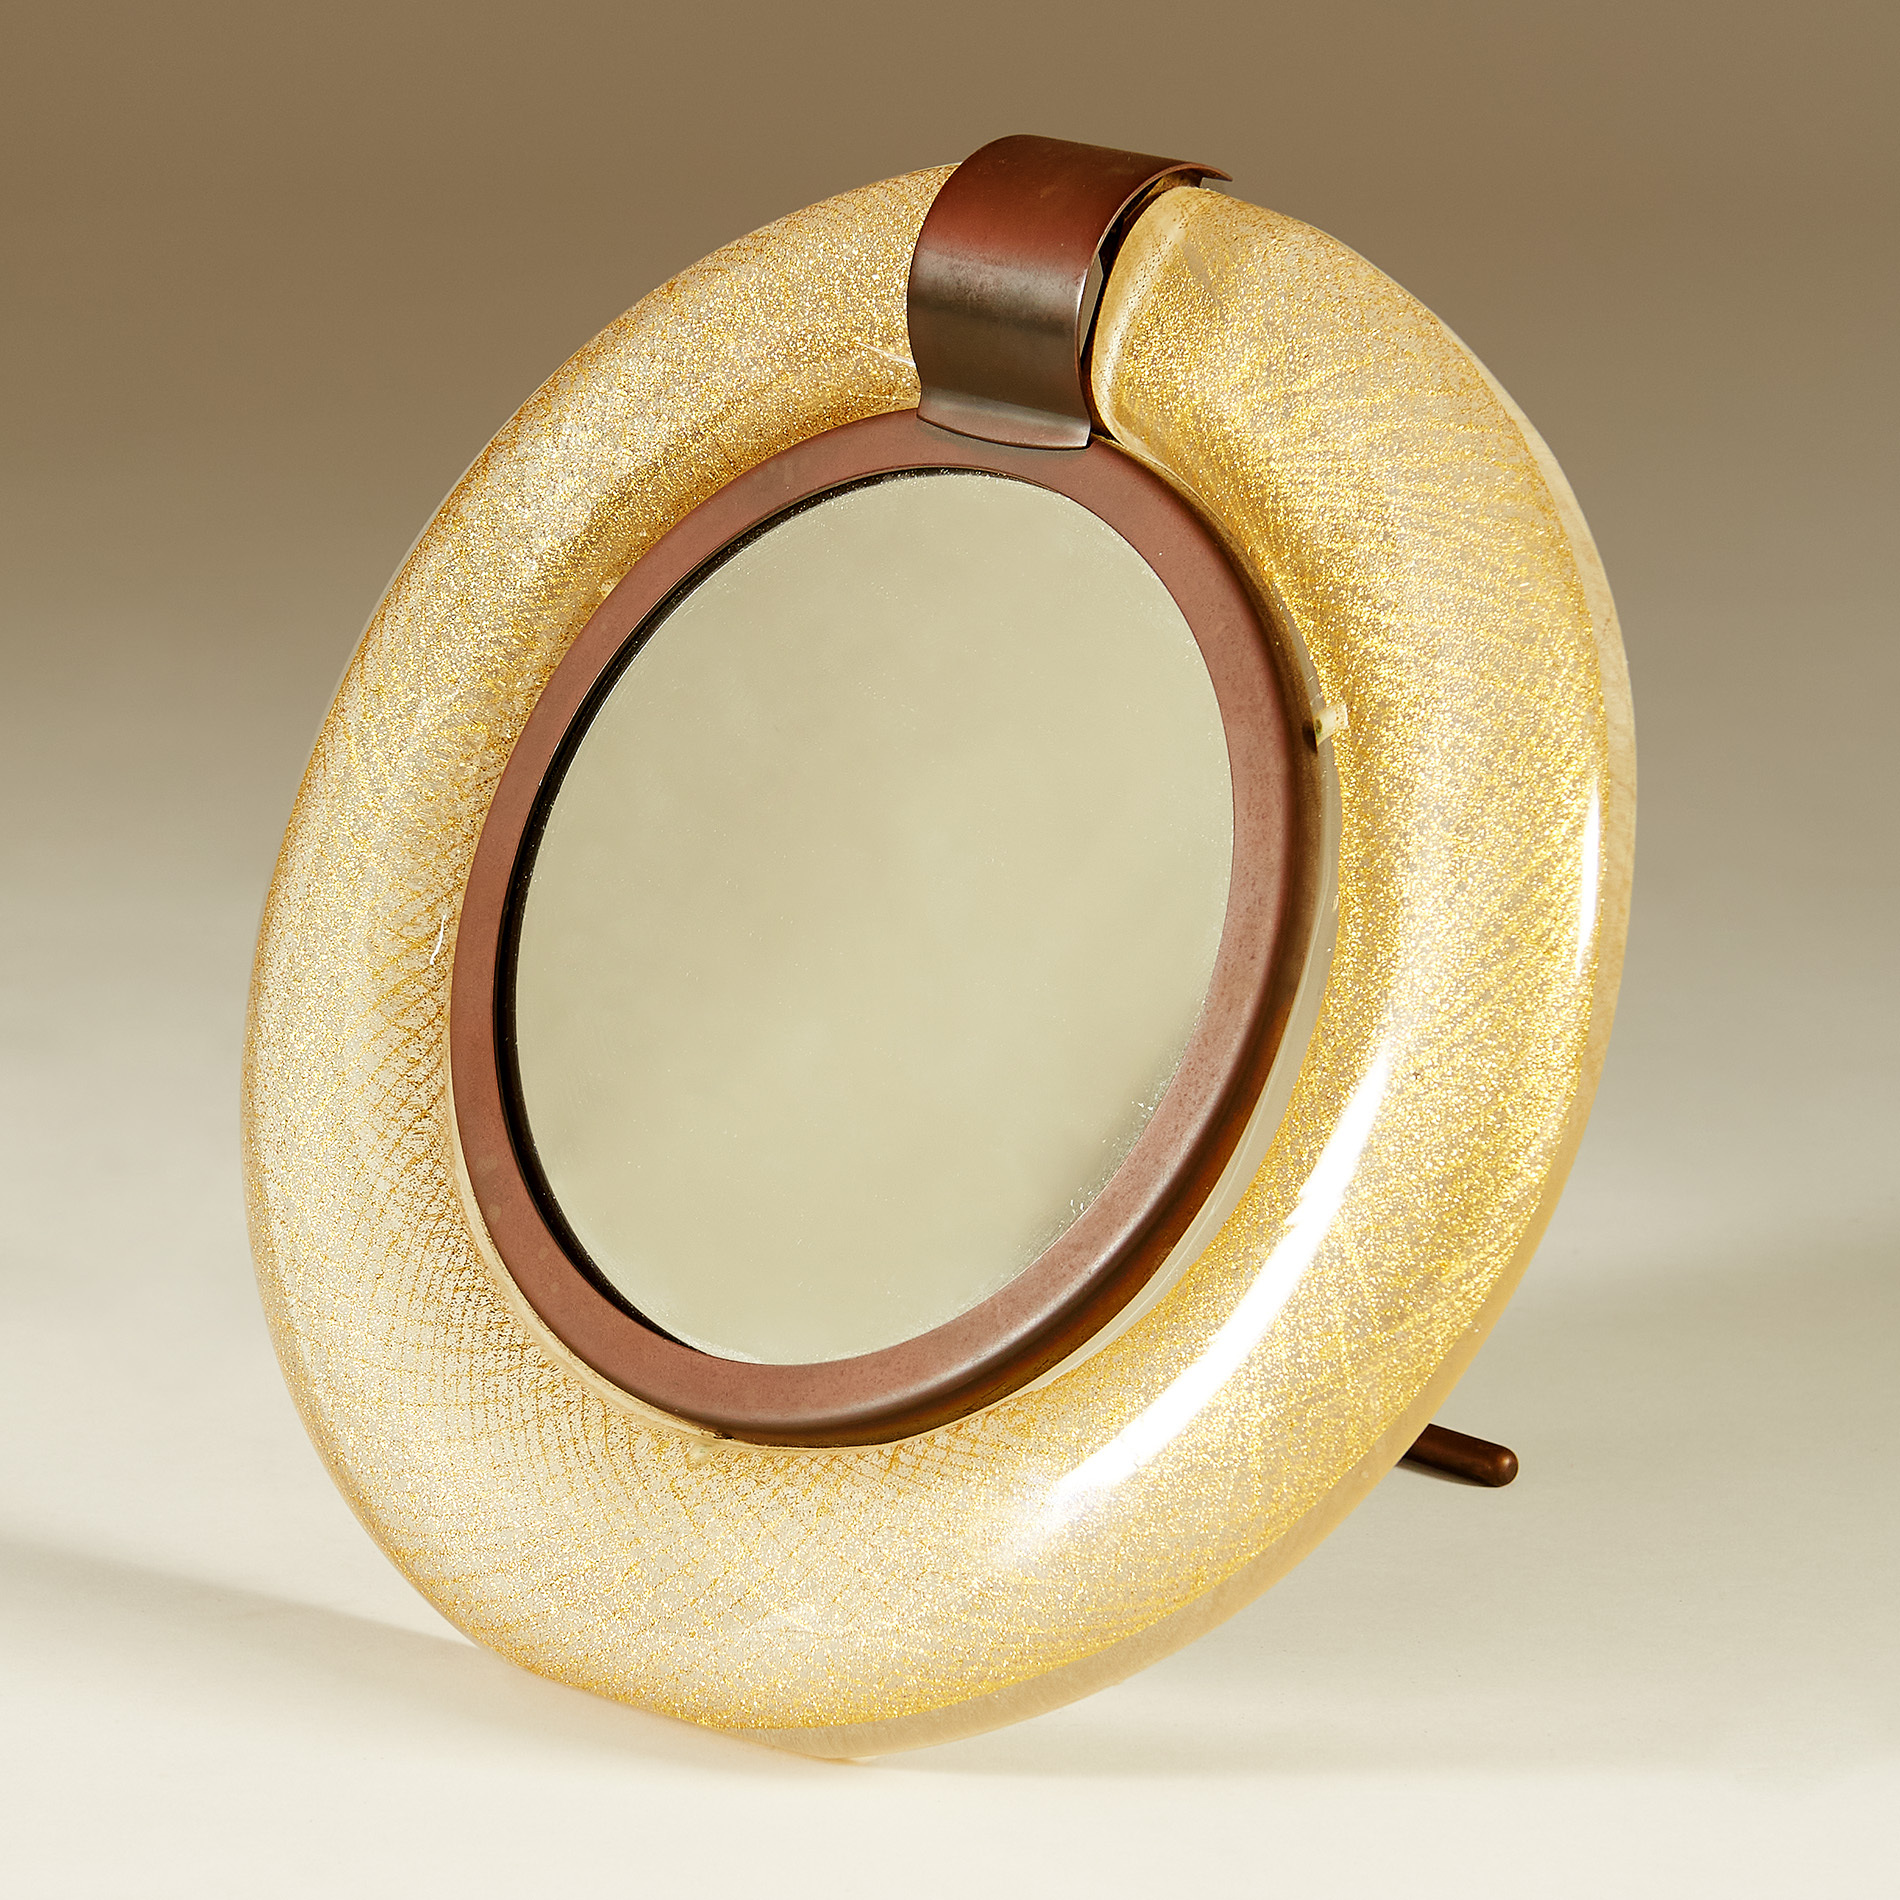 Murano Circular Gold Flecked Mirror 20210427 0024 V1